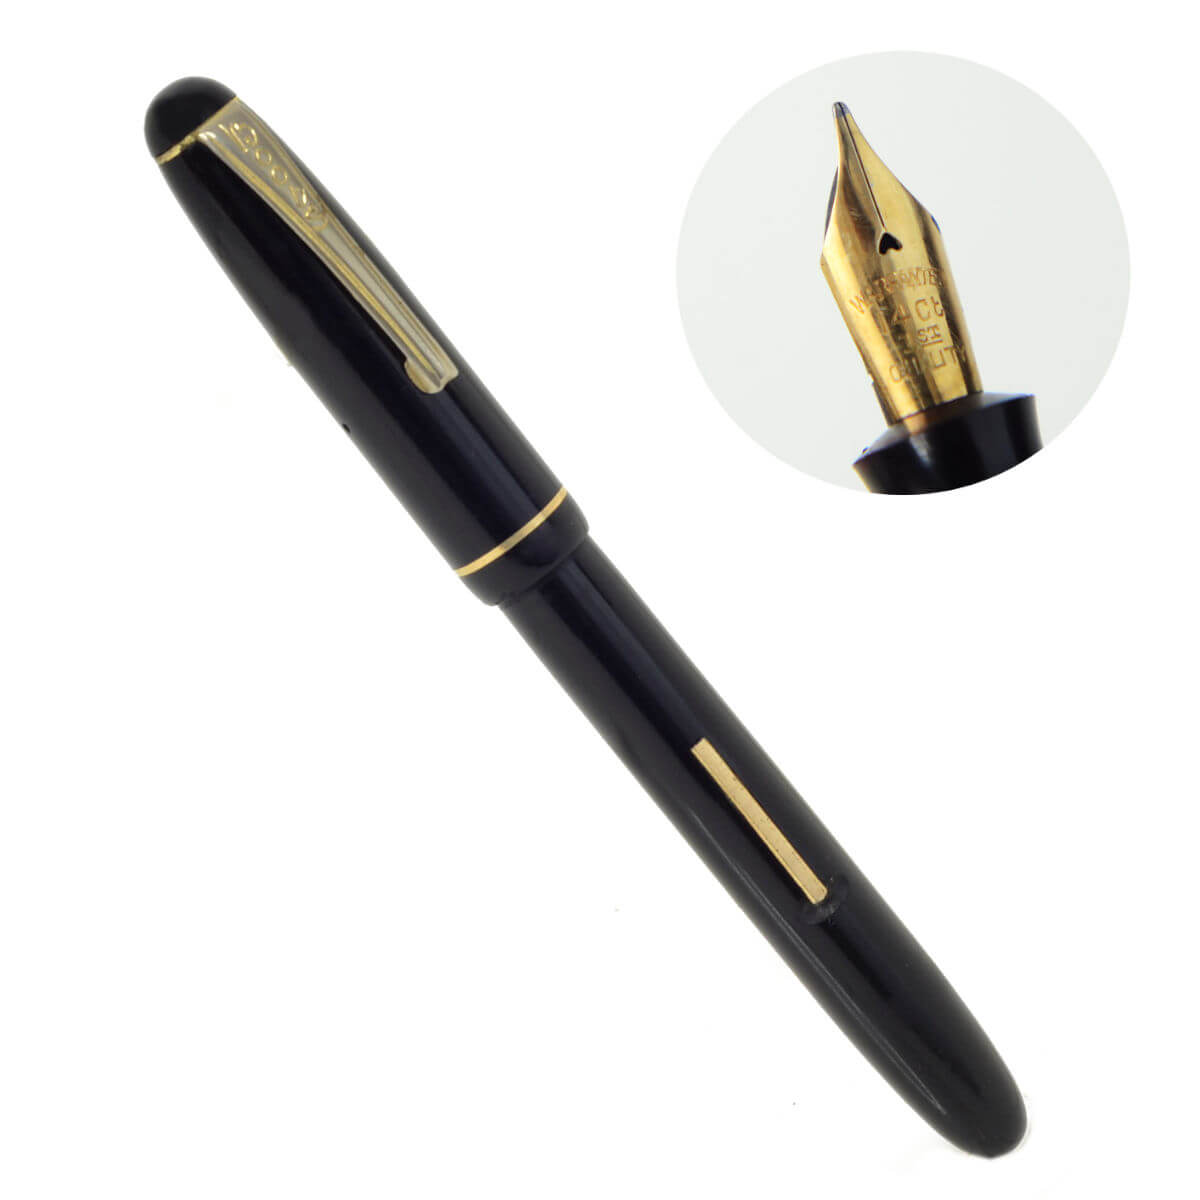 Vintage Burnham boots lever filler fountain pen – 14K gold M nib – Used